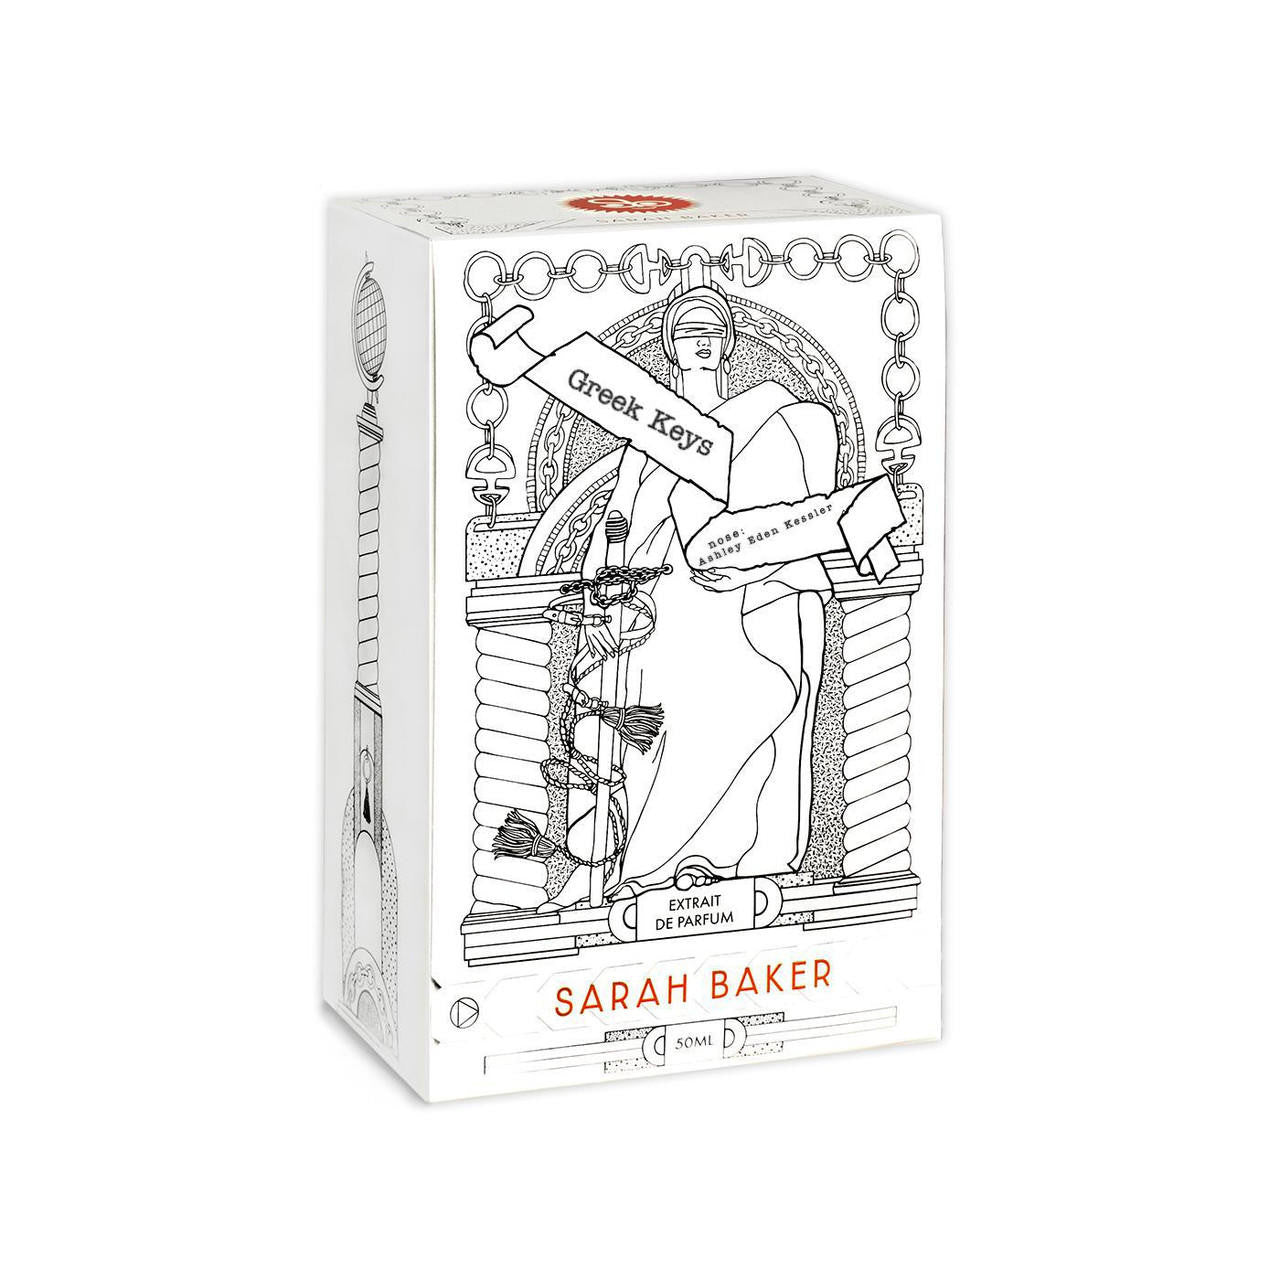  Sarah Baker Greek Keys Extrait de Parfum 